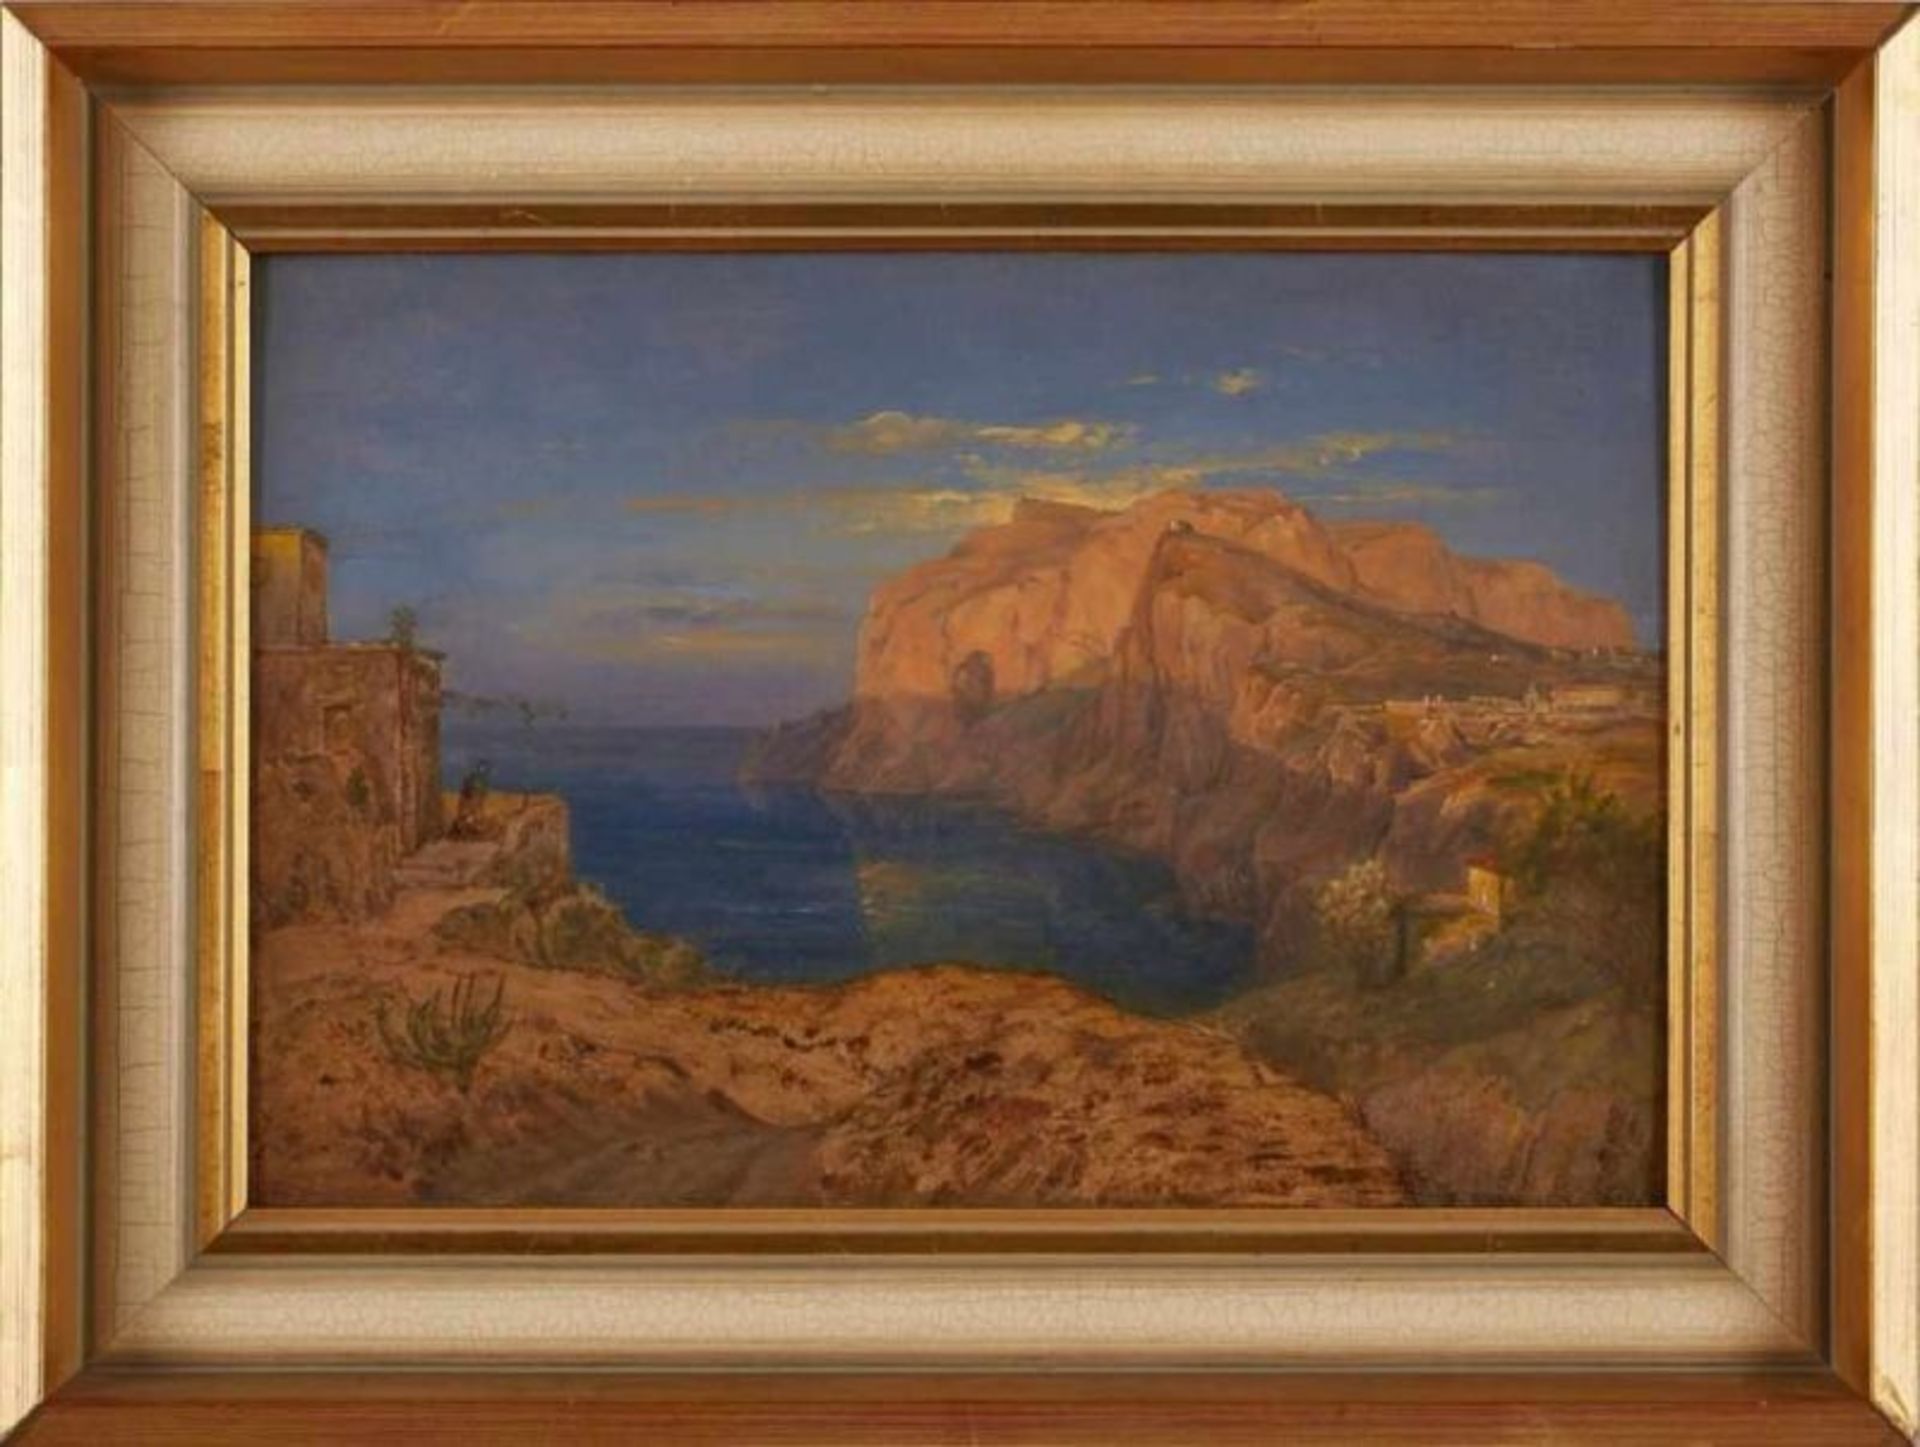 Gemälde/Ölstudie Carl Morgenstern 1811 Frankfurt - 1893 Frankfurt "Capri" Verso von alter Hand - Image 3 of 3